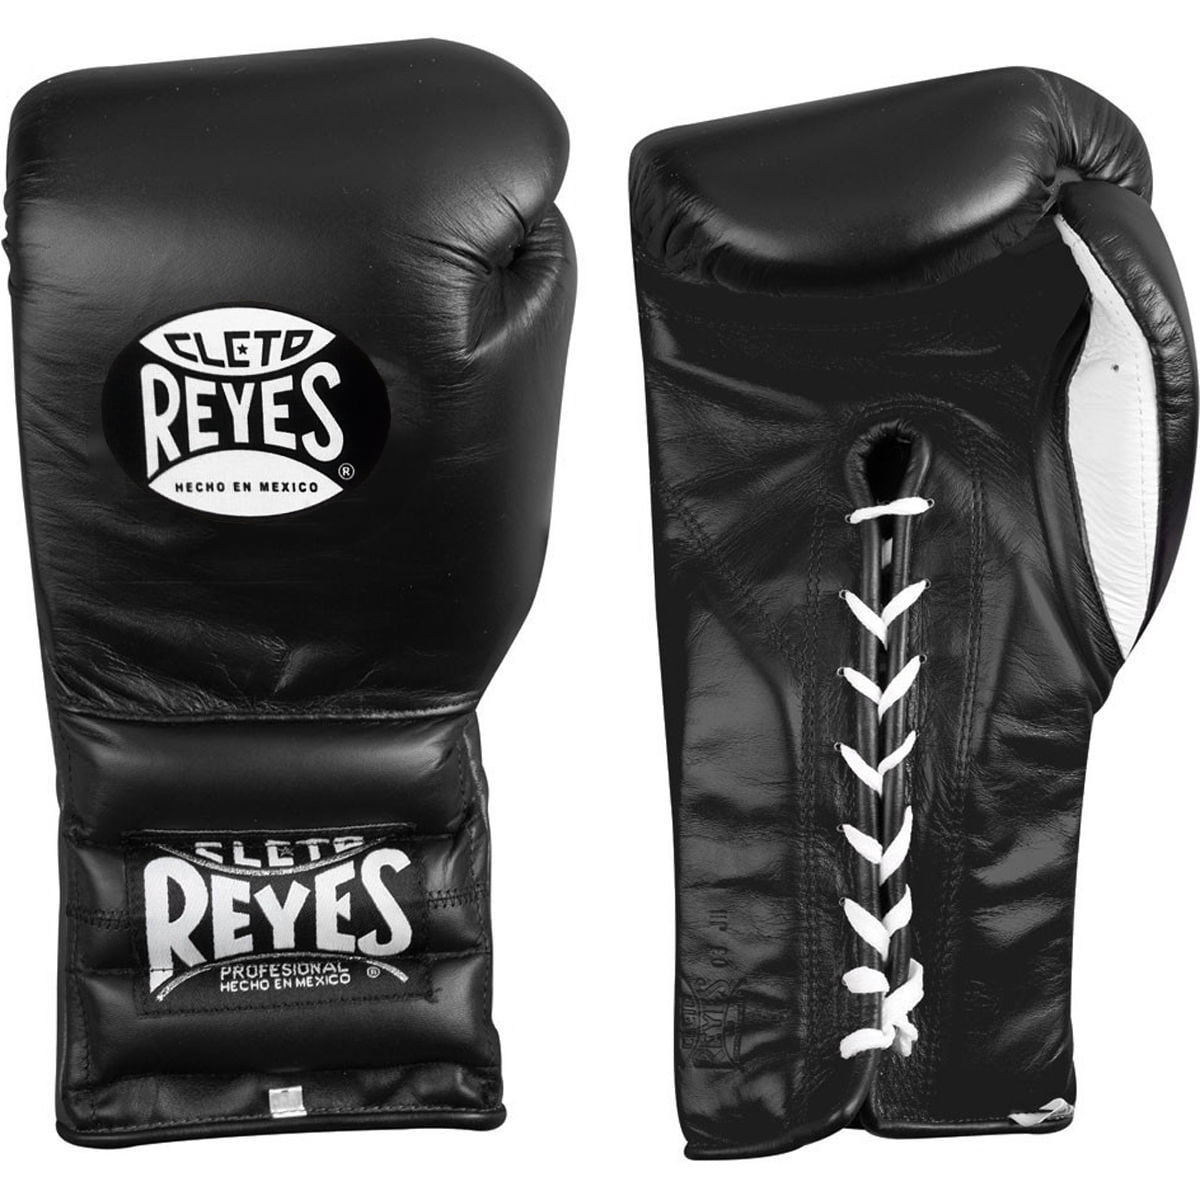 Black Cleto Reyes Boxing Professional Sparring Gloves 